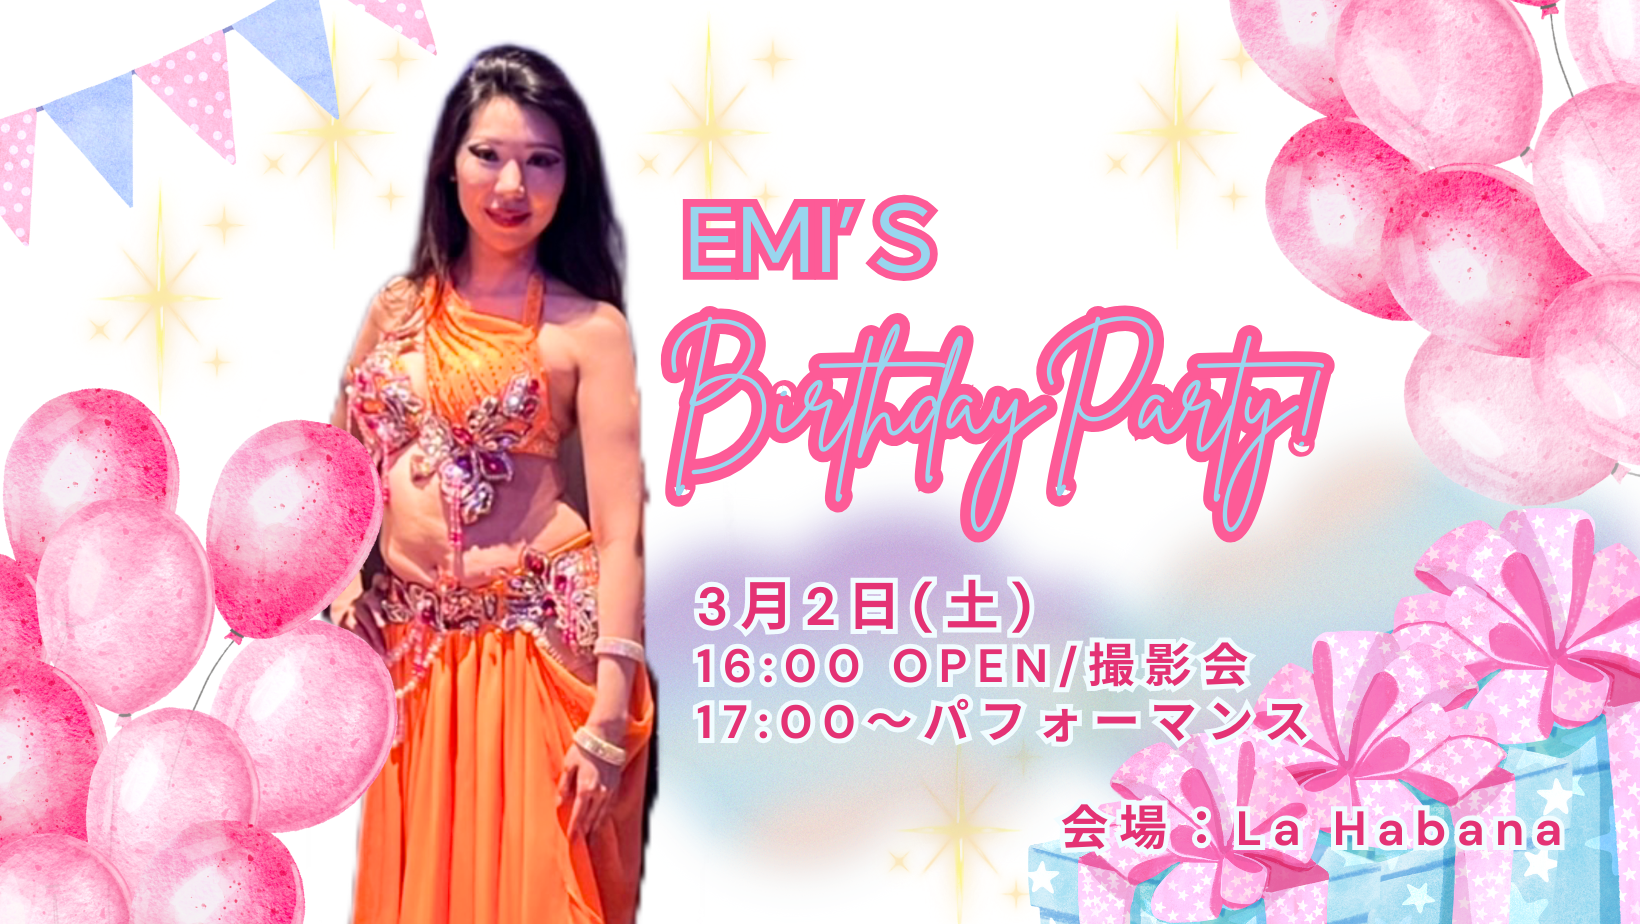 3月2日(土)Emi’s Birthdai Party!